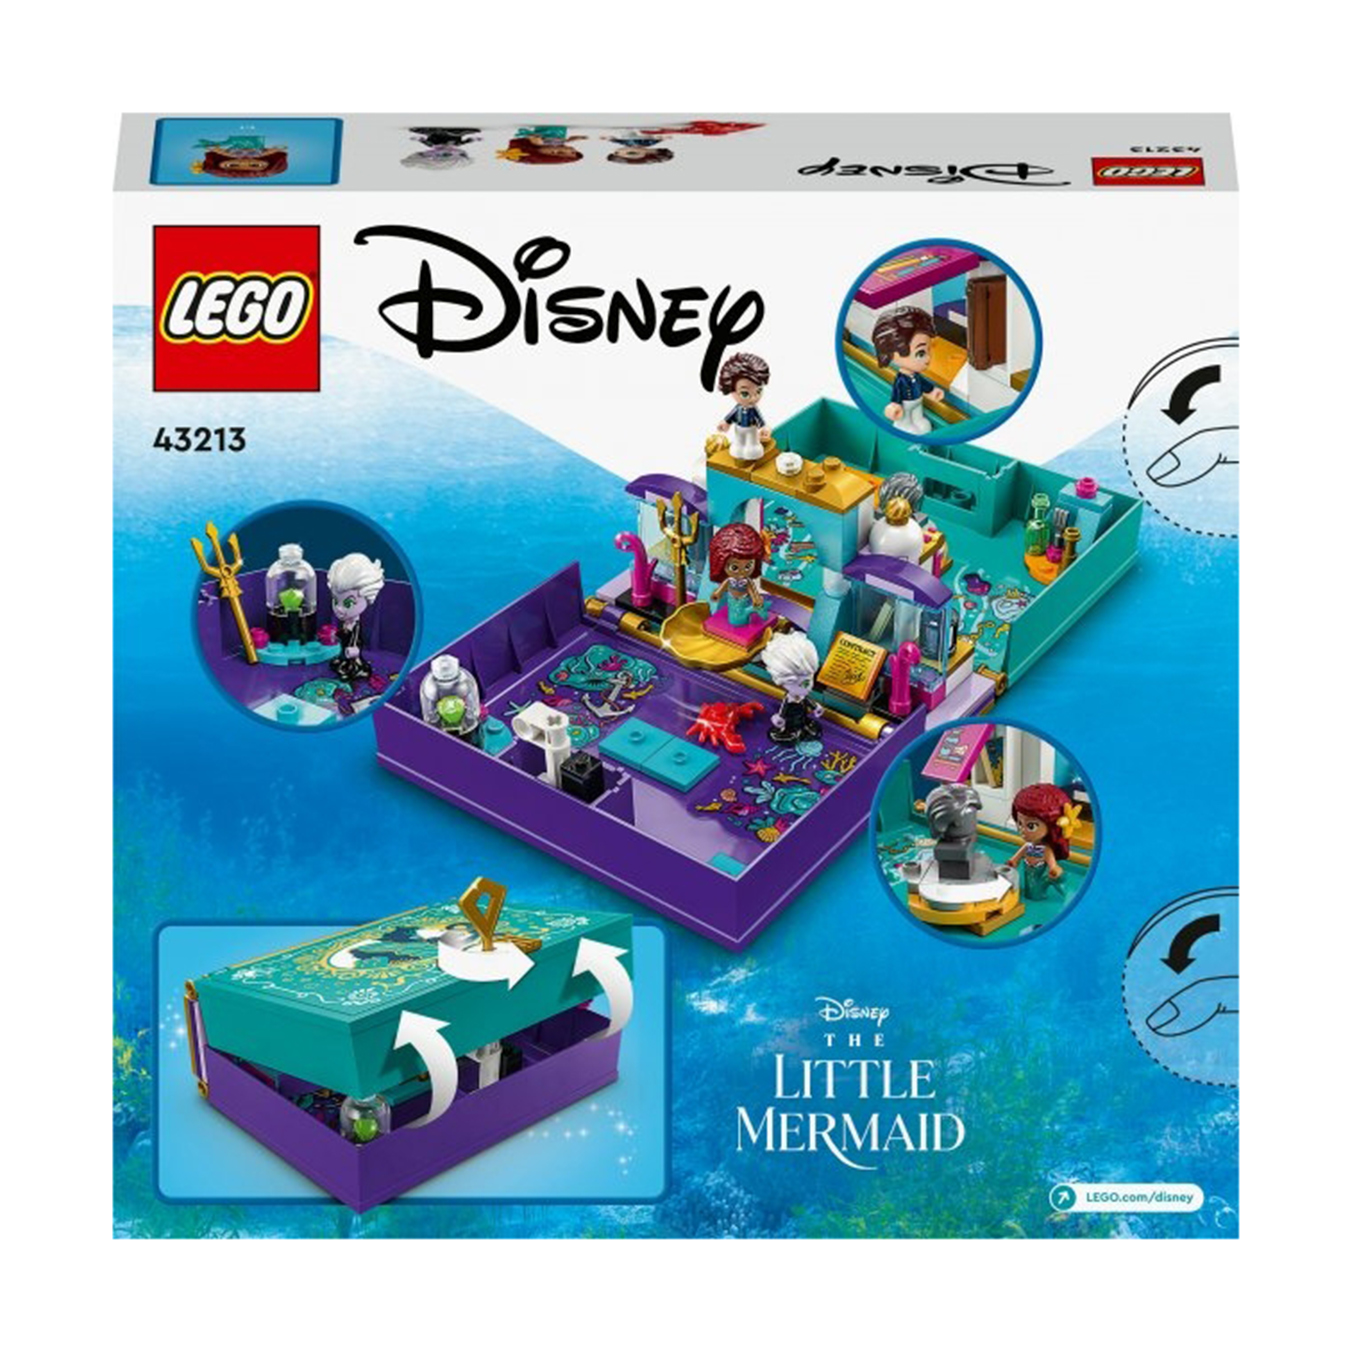 Constructor LEGO Little Mermaid Adventure Book